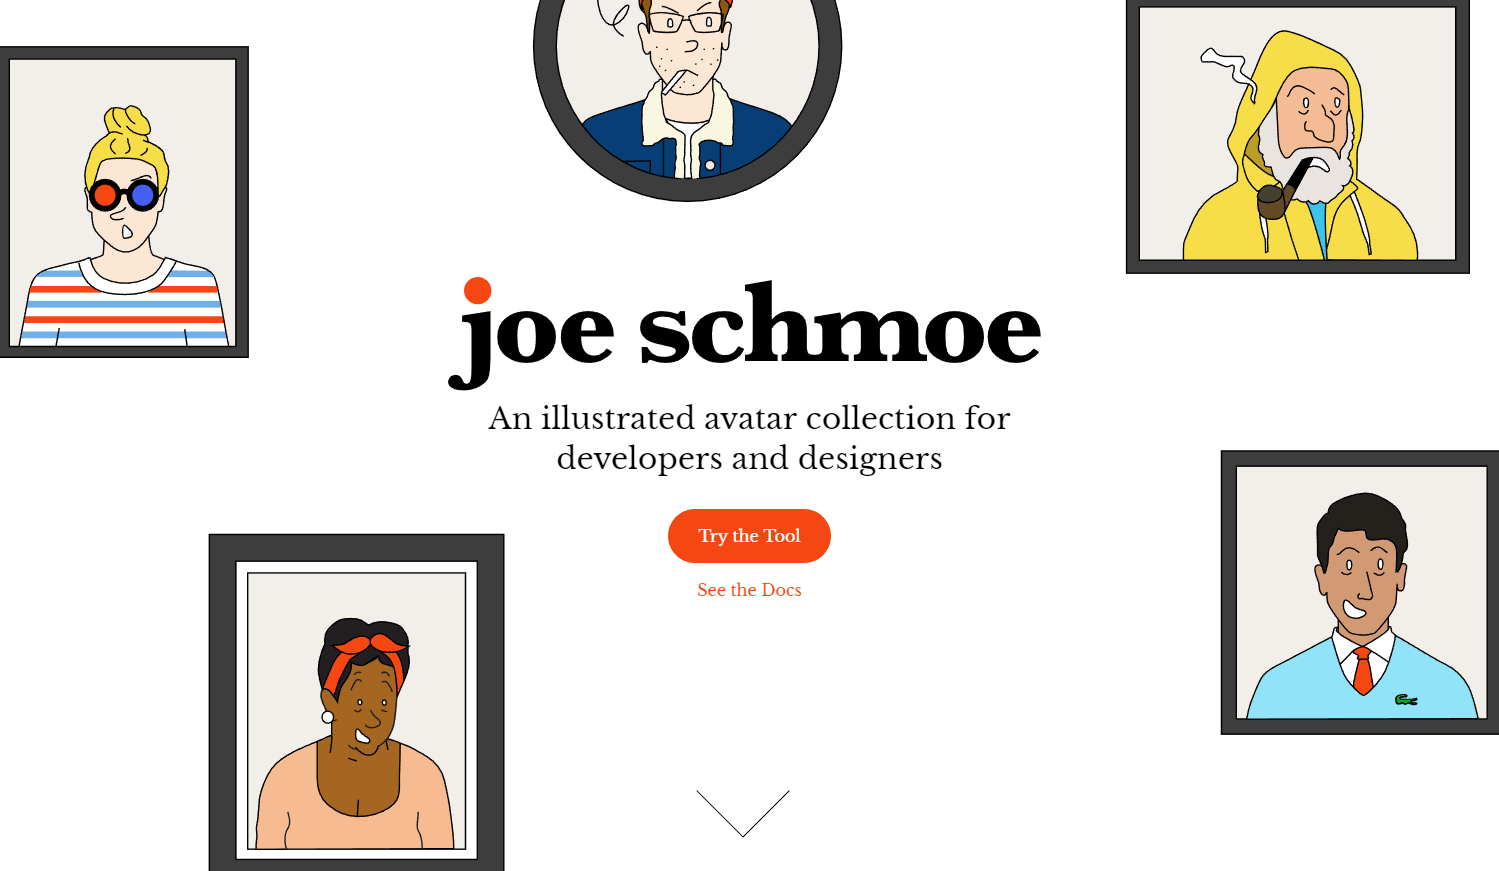 URLで名前を指定すると人物のダミーアバターを生成してくれるWEBサービス「Joe Schmoe」